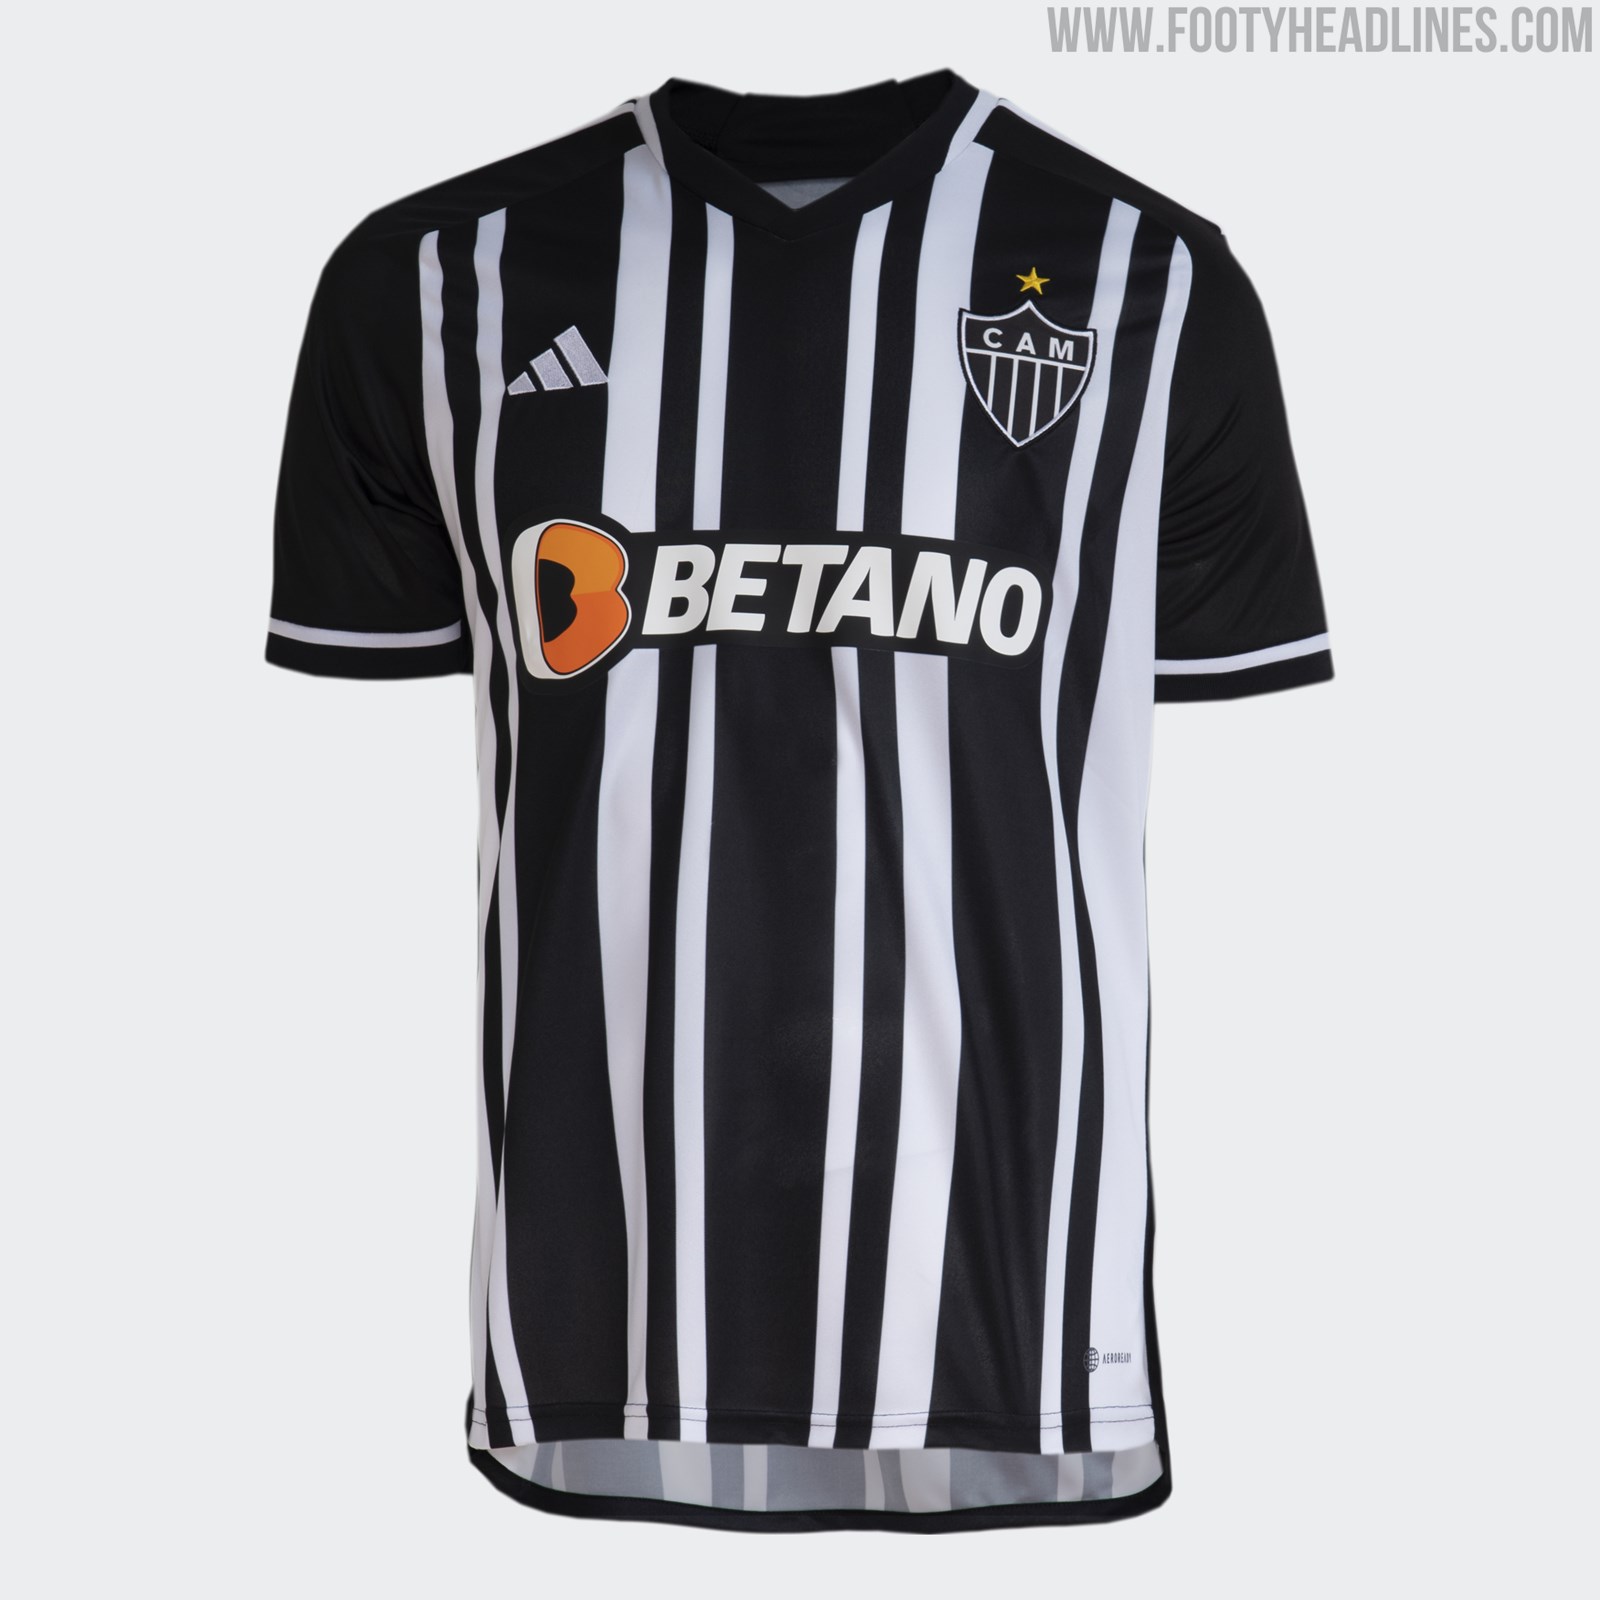 Atlético Mineiro 23-24 Home & Away Kits Released - Footy Headlines